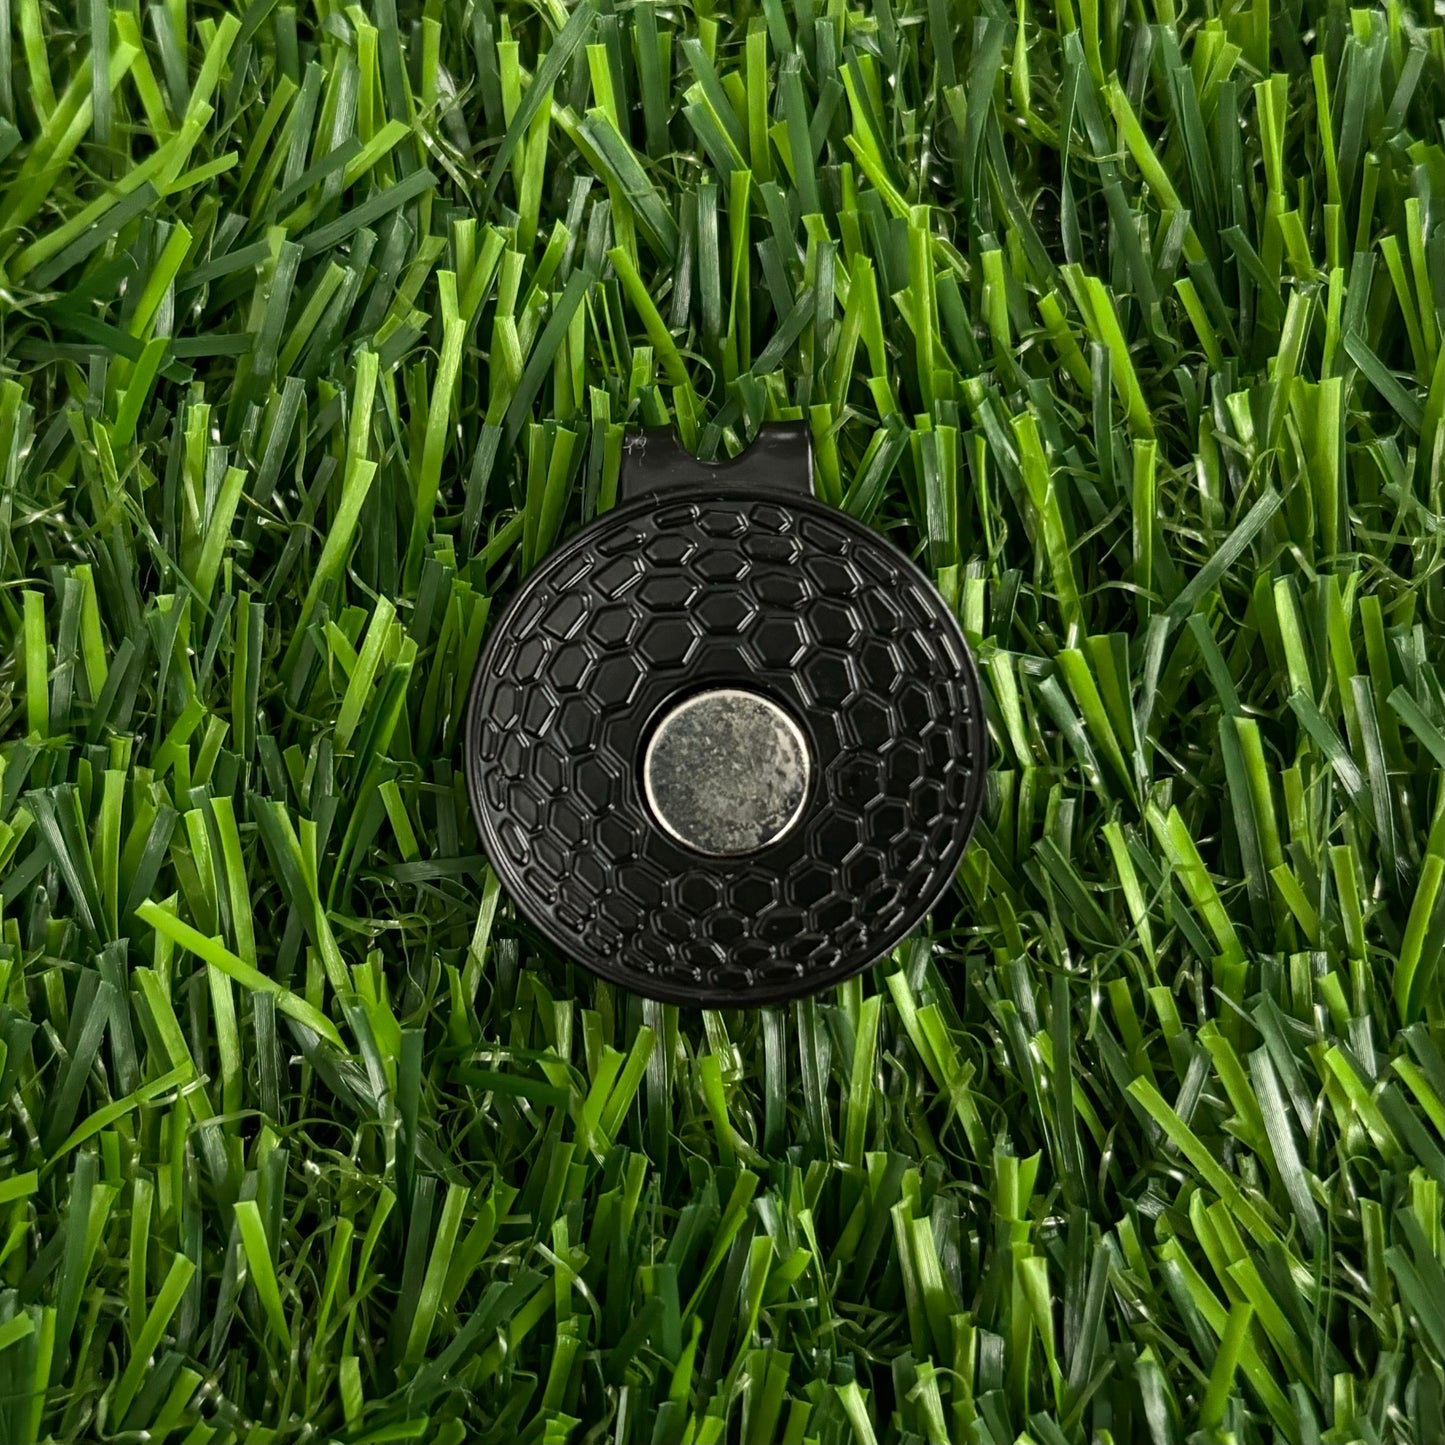 I love Big Putts Golf Ball Marker | Golf Accessory